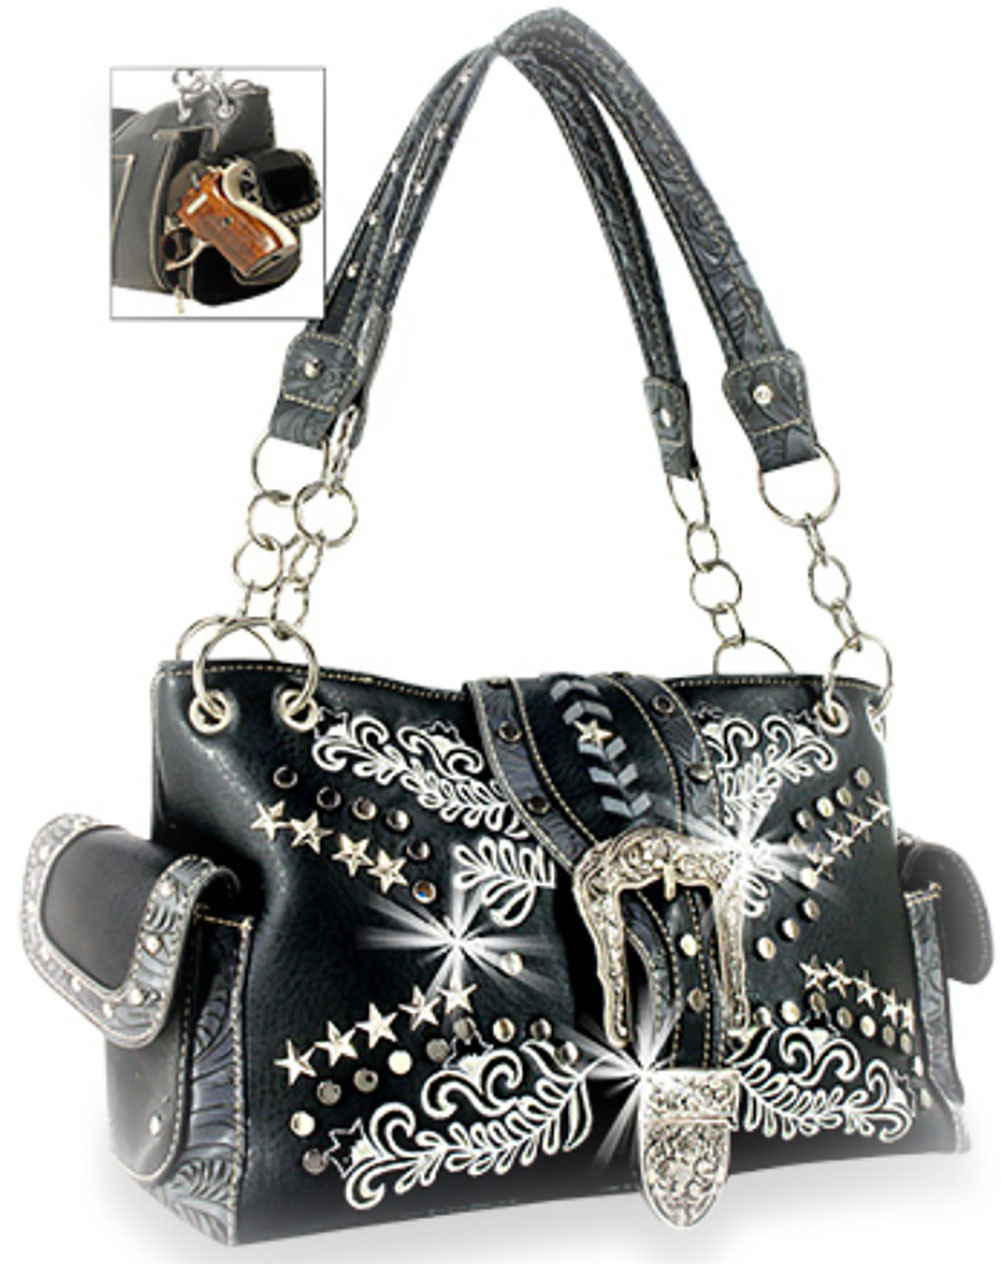 Western Handbag Laser Cut Floral Buckle Conceal Carry Shoulder Purse